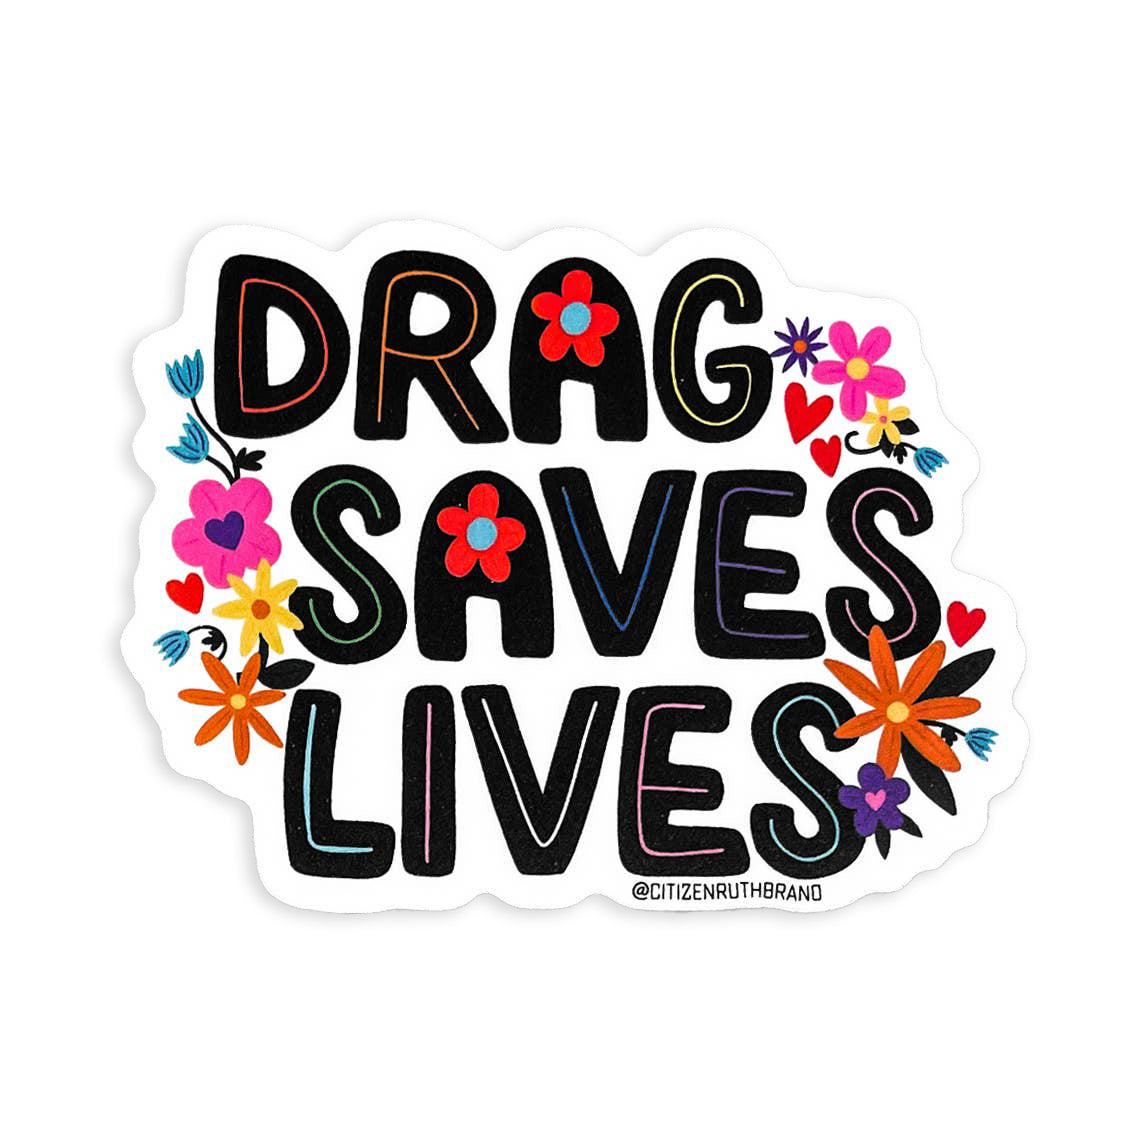 Drag Saves Lives Sticker